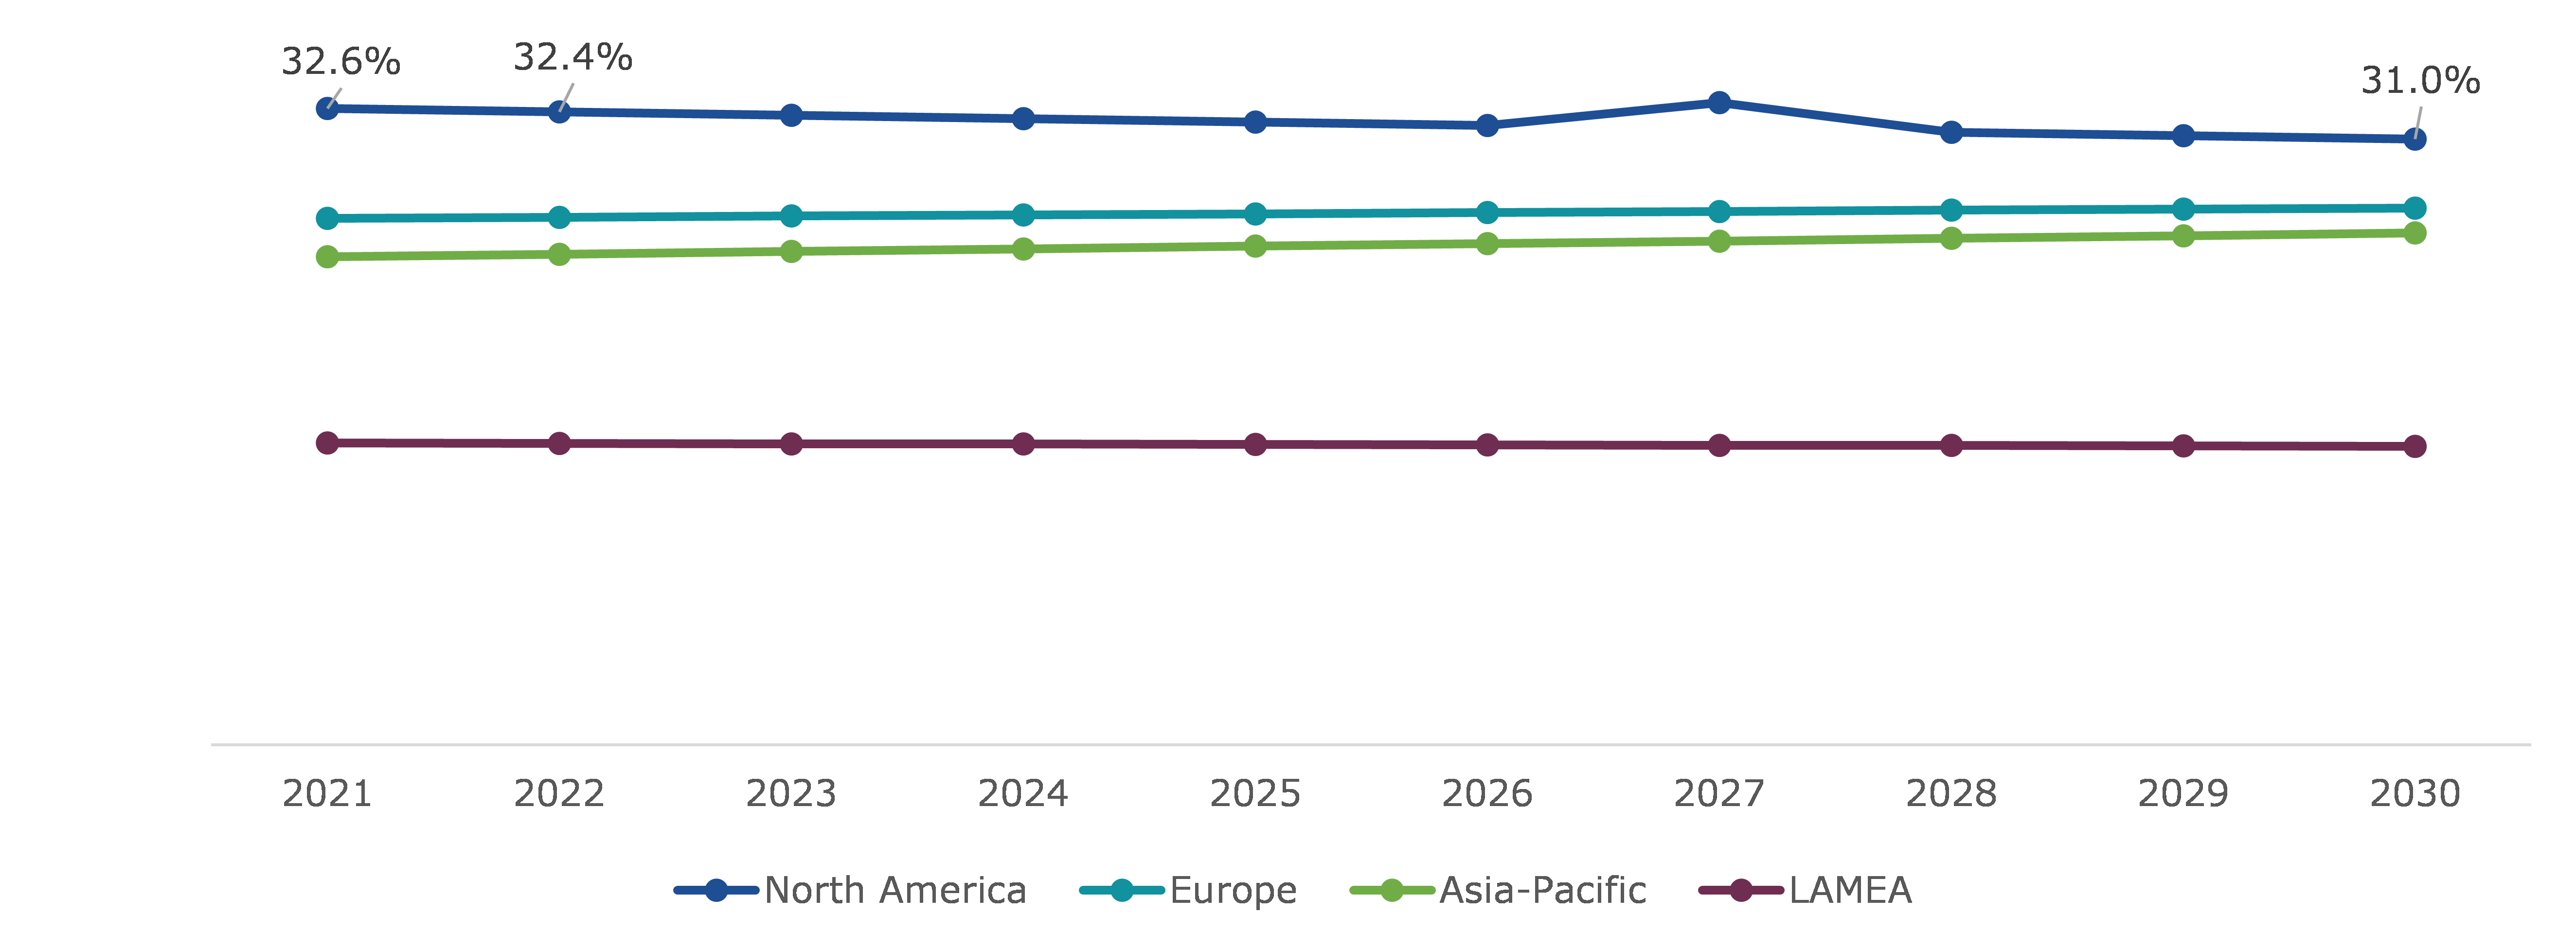 Global Organic Dinnerware Market Size & Forecast, By Region, 2021-2030 (USD Million)	